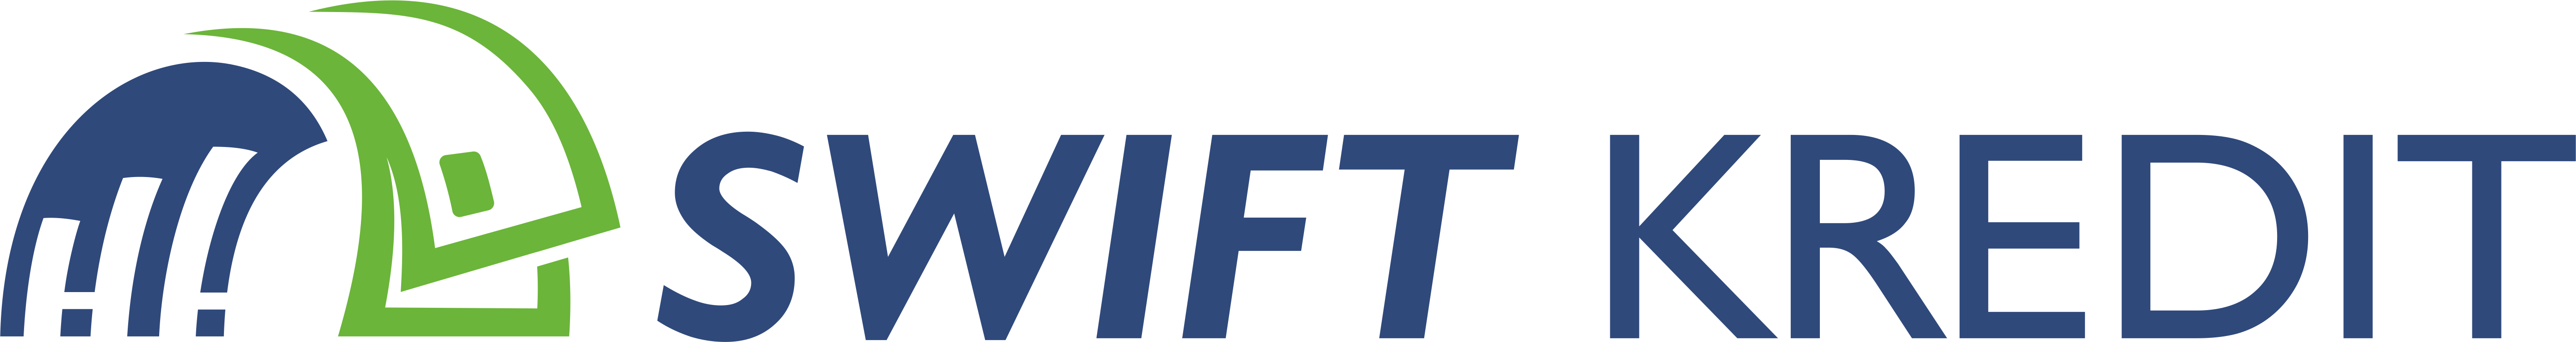 SWIFT KREDIT logo